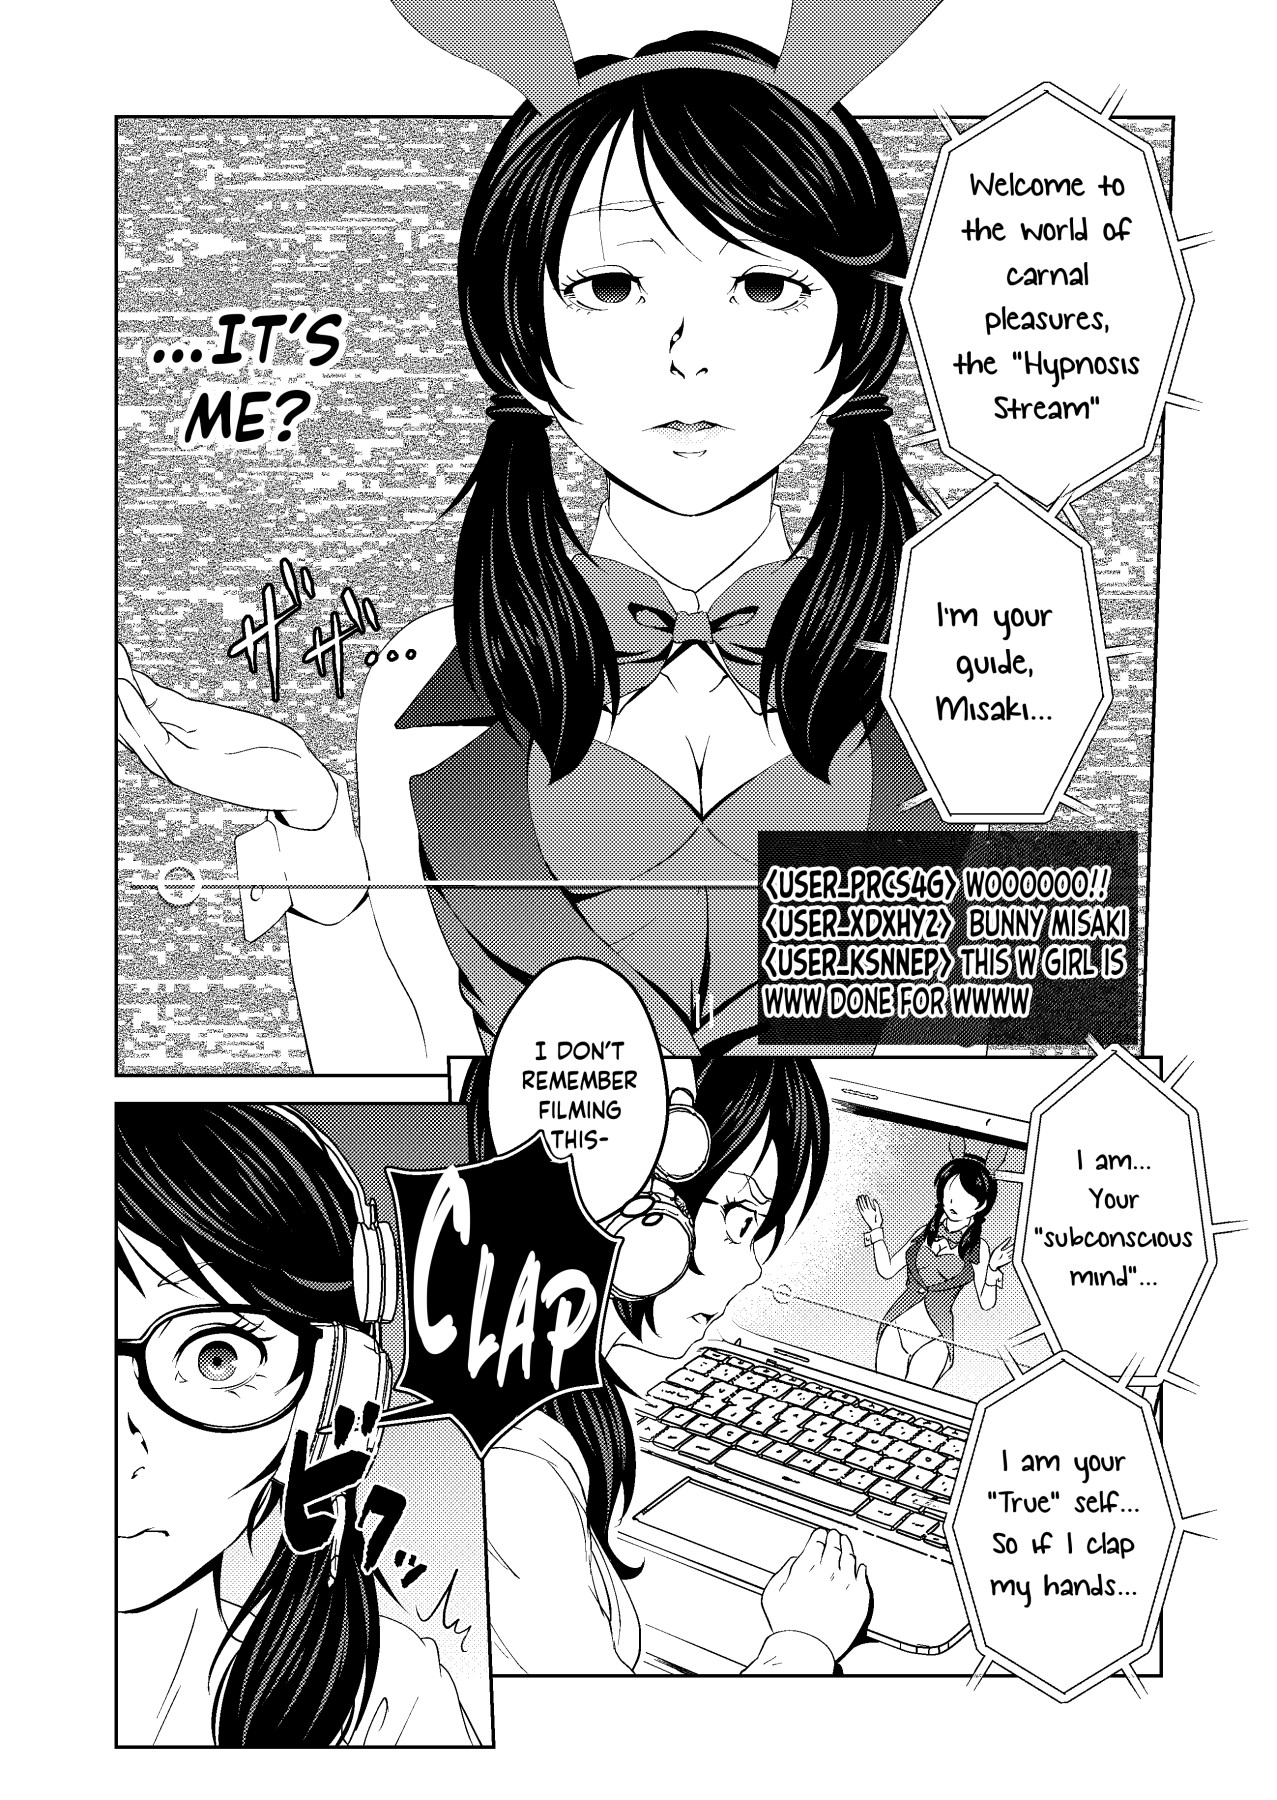 Hentai Manga Comic-HypnosiS Streams Episode 1.2-Read-2